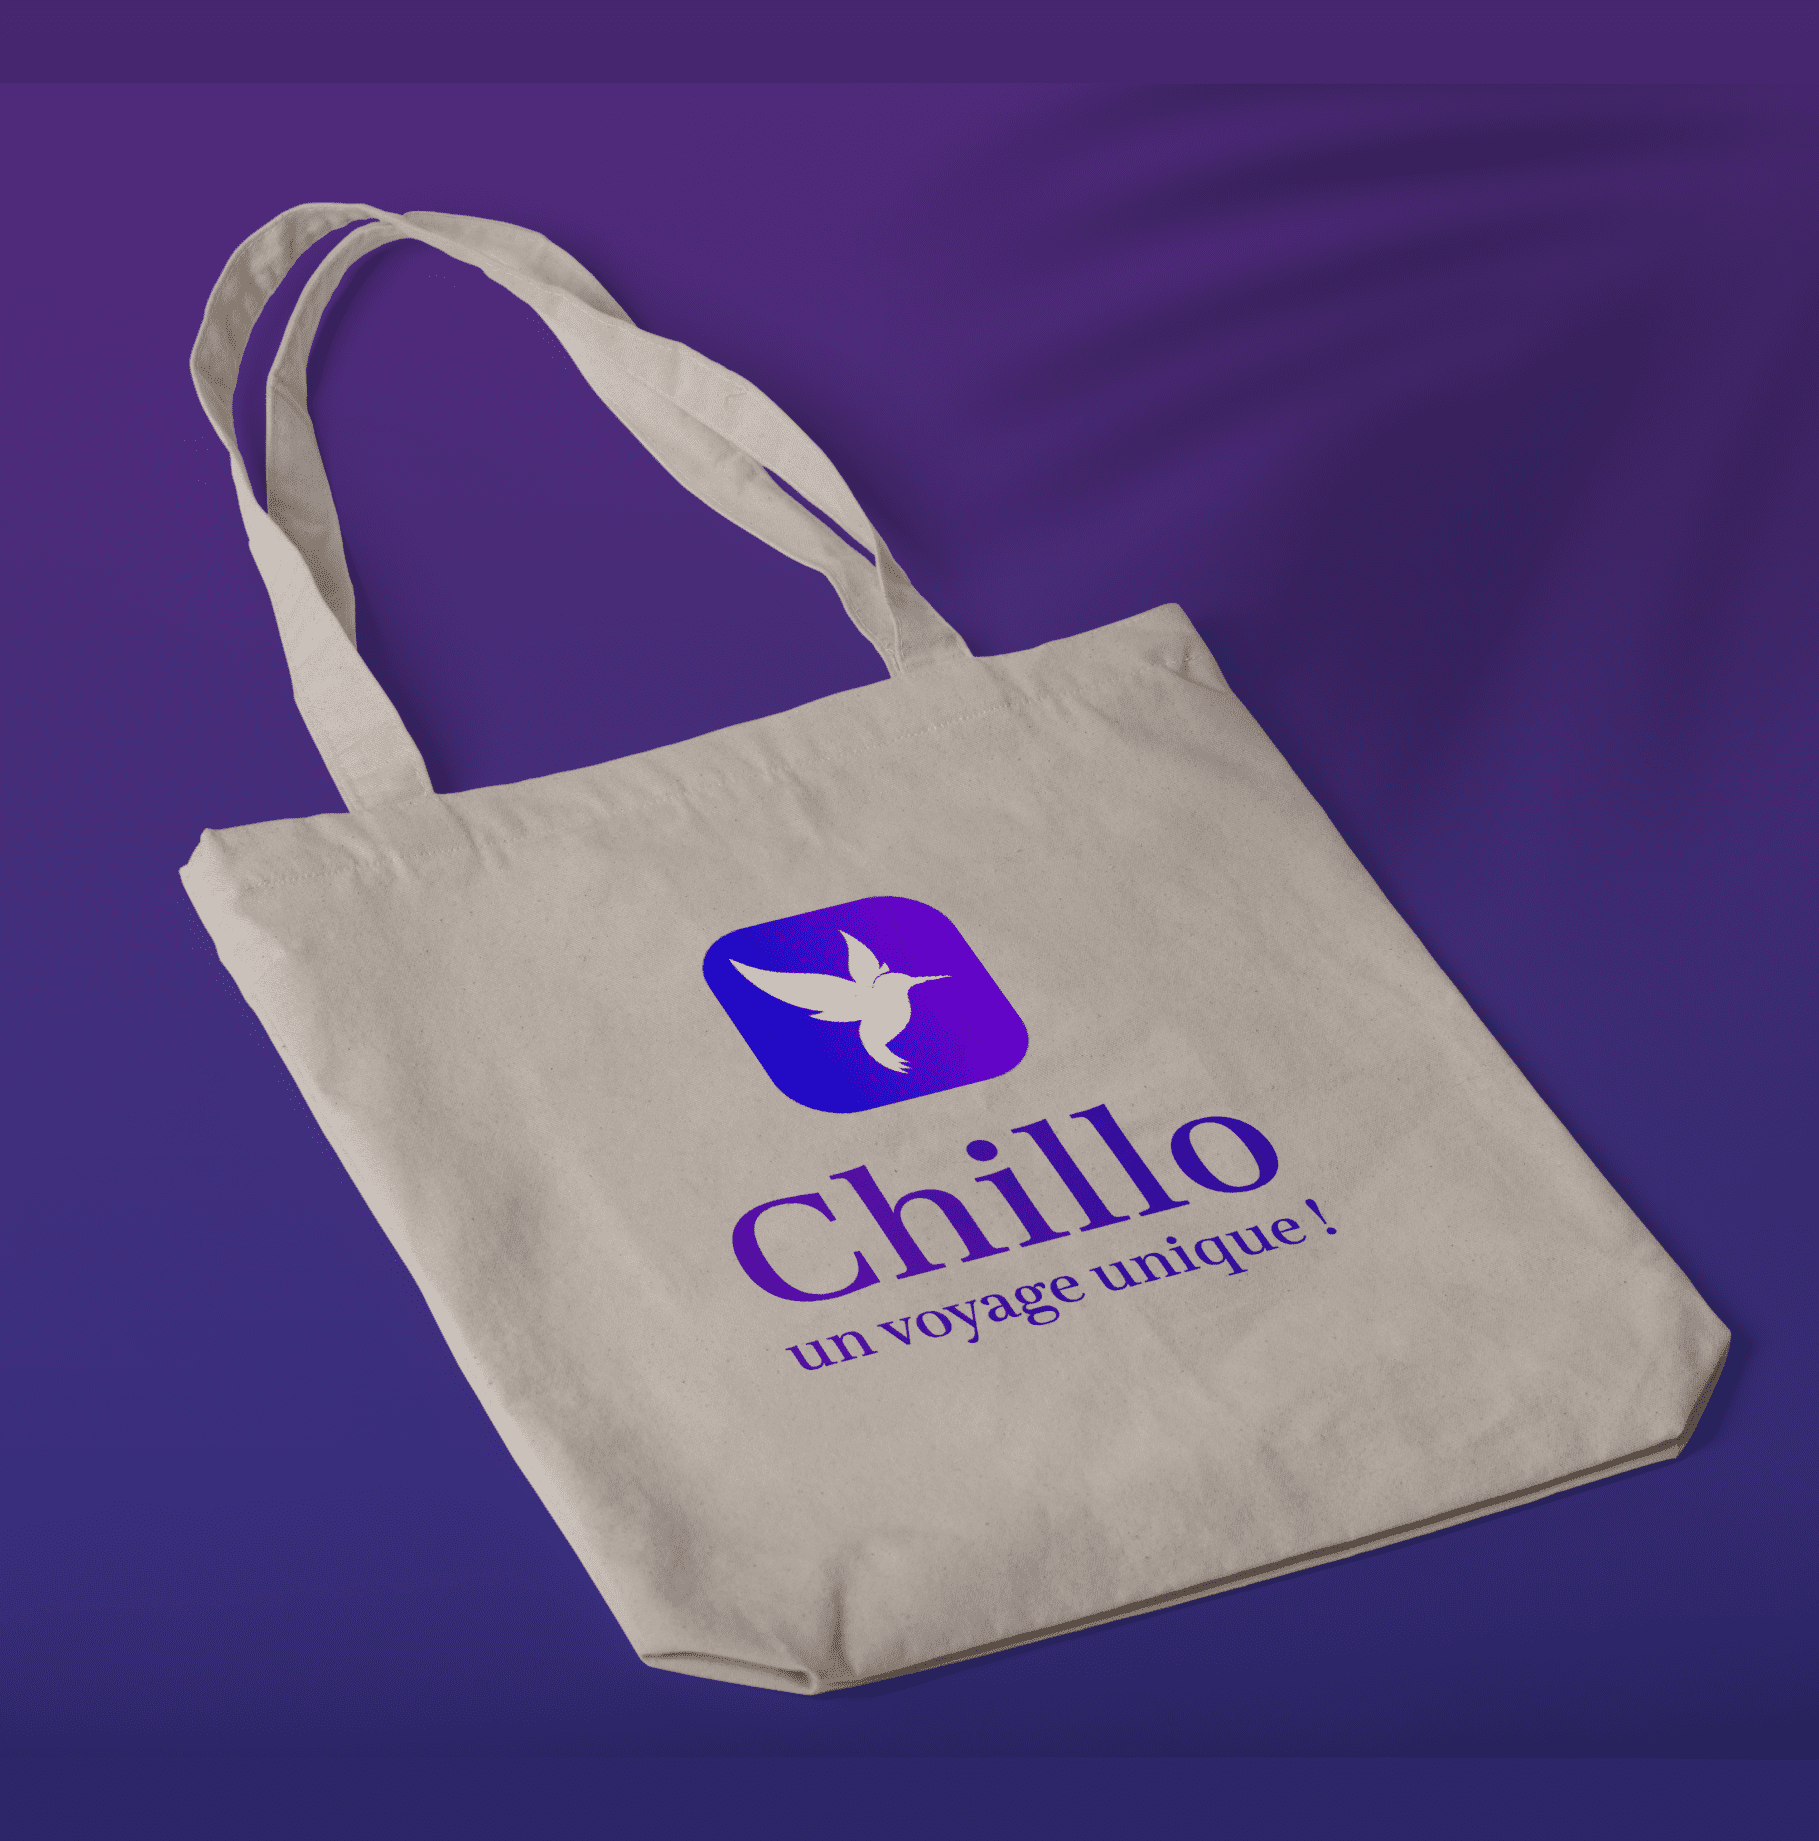 merchandising-chillo-fwi-ambition-agency